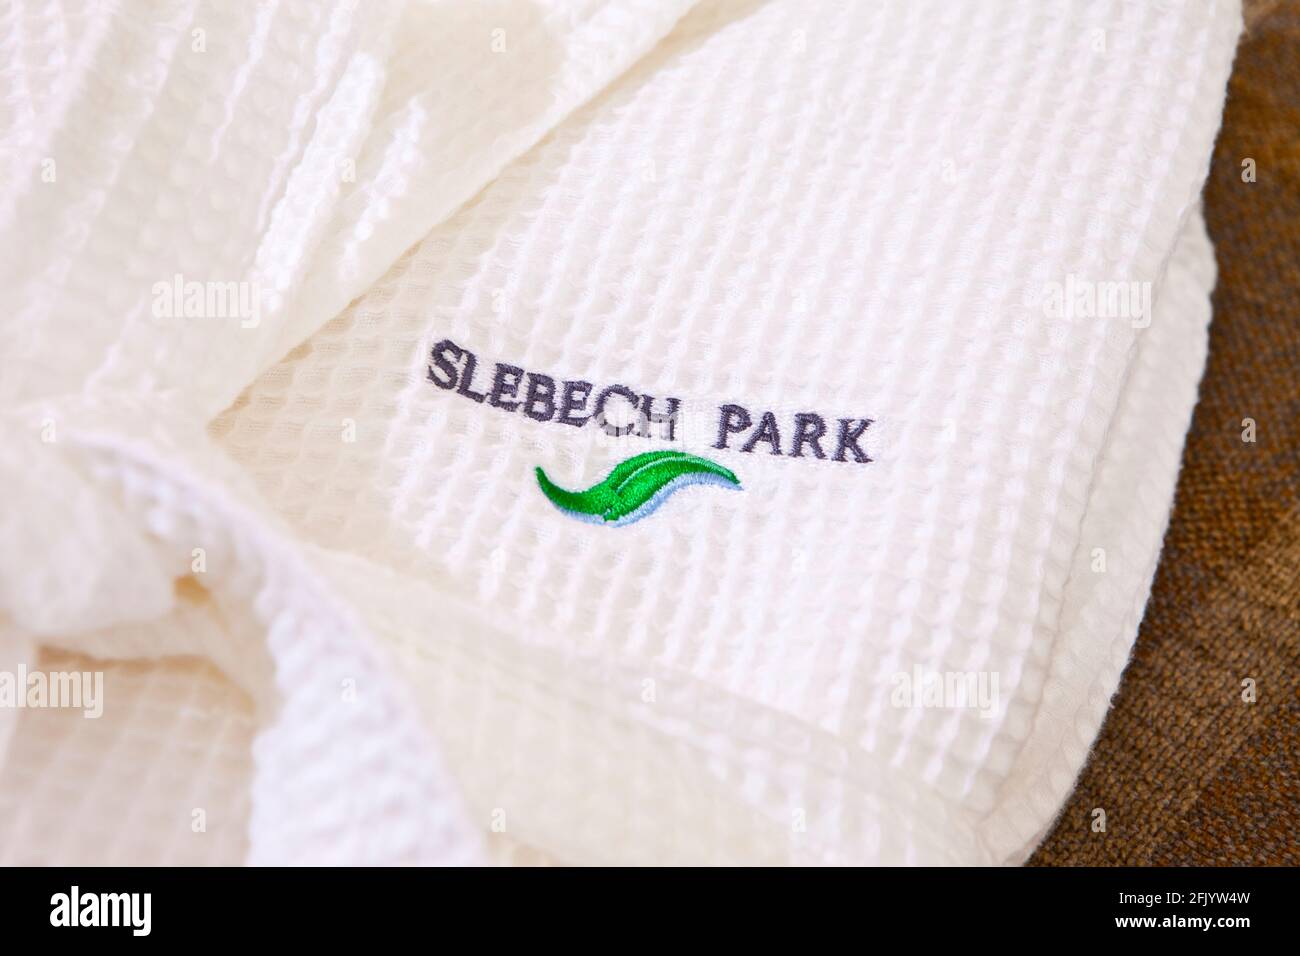 Slebech Park Hotel branded robe, Pembrokeshire, West Wales, UK Stock Photo